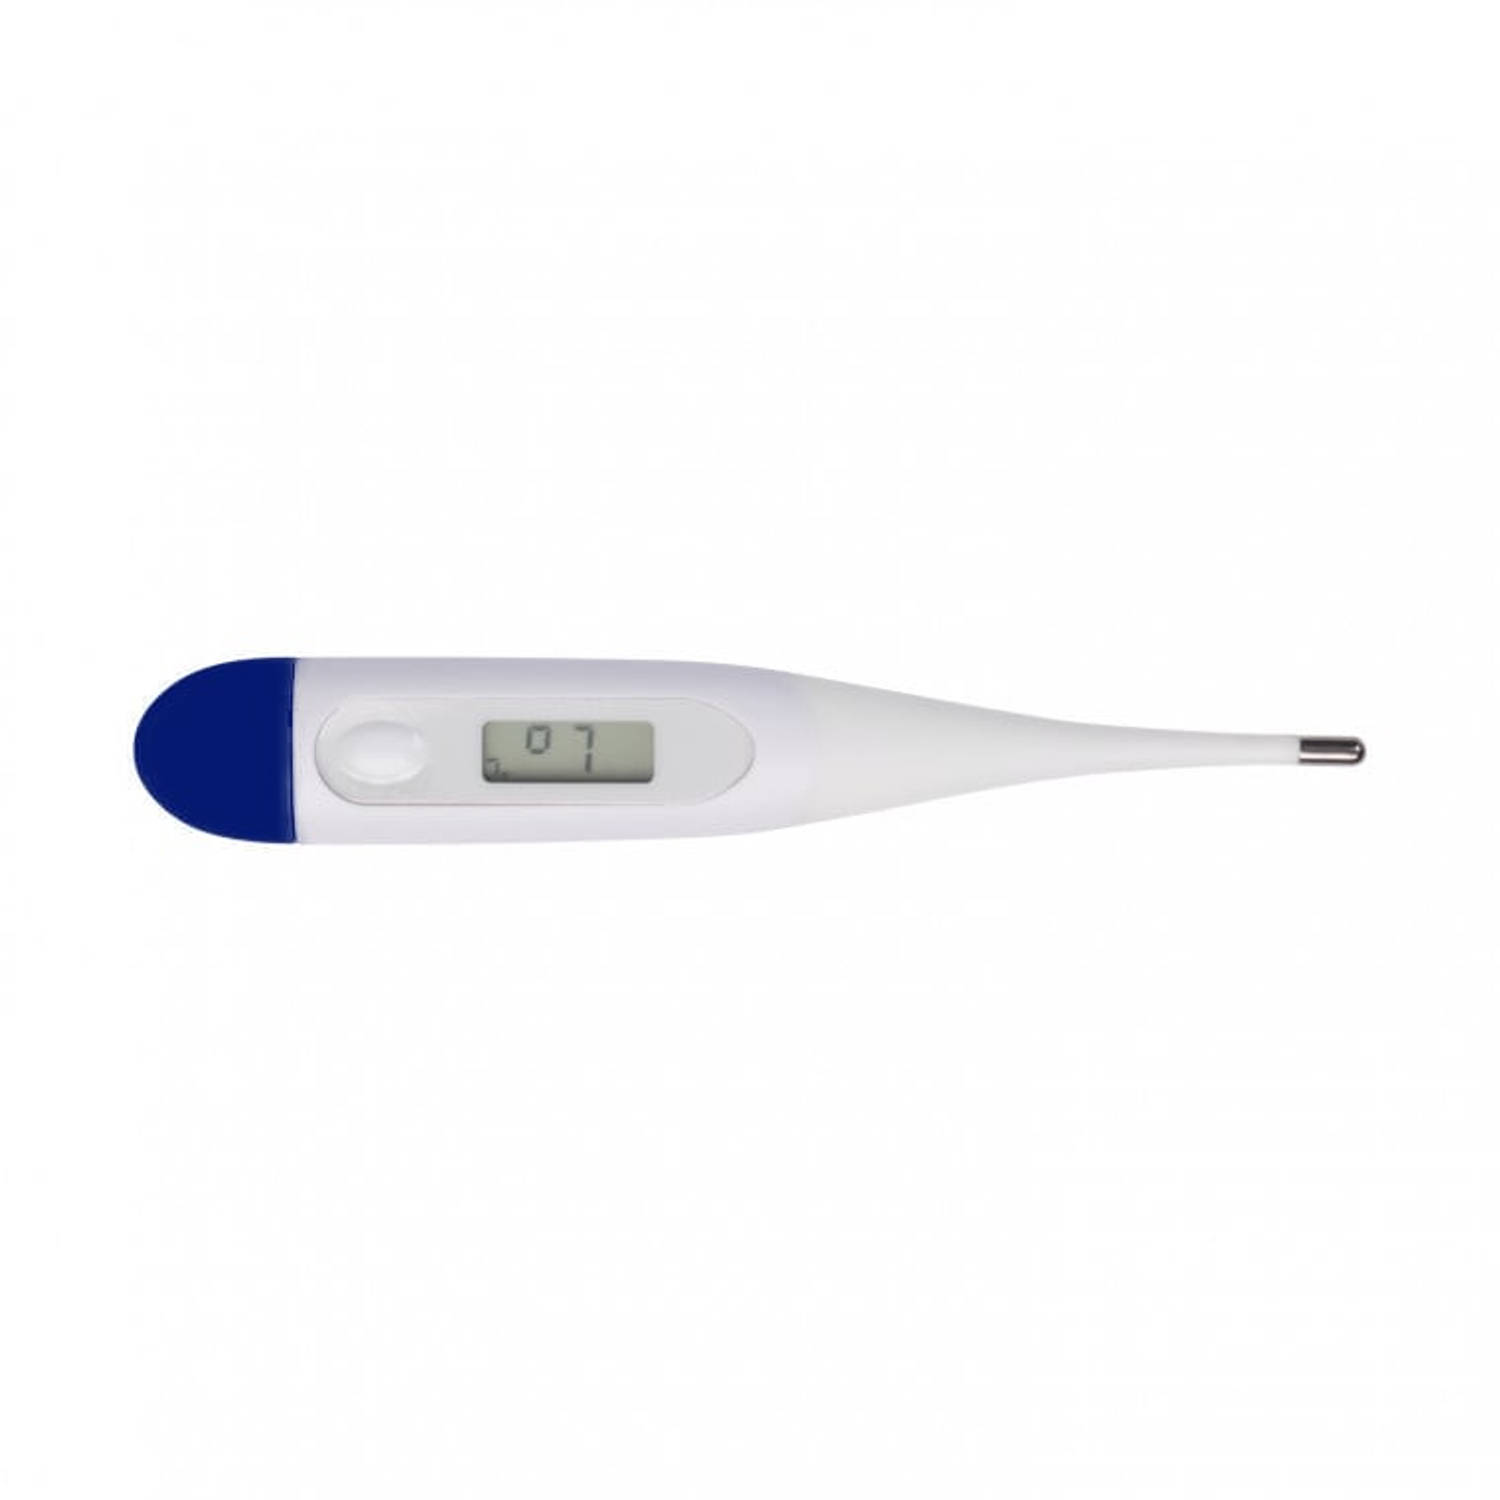 Biopax Digitale Thermometer 100% waterdicht